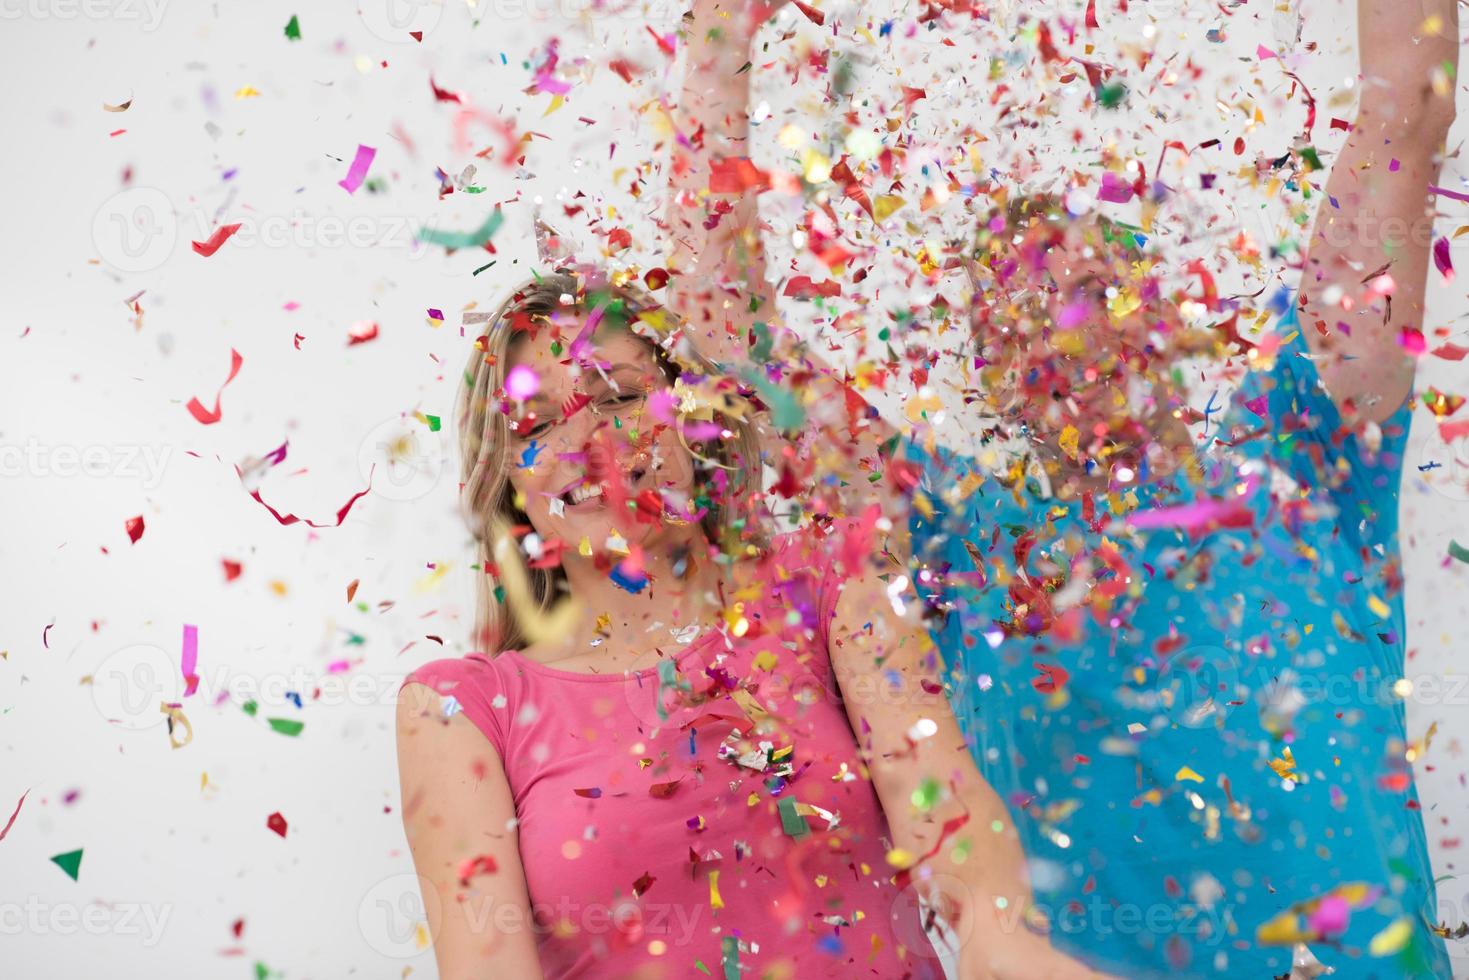 casal jovem romântico comemorando festa com confete foto